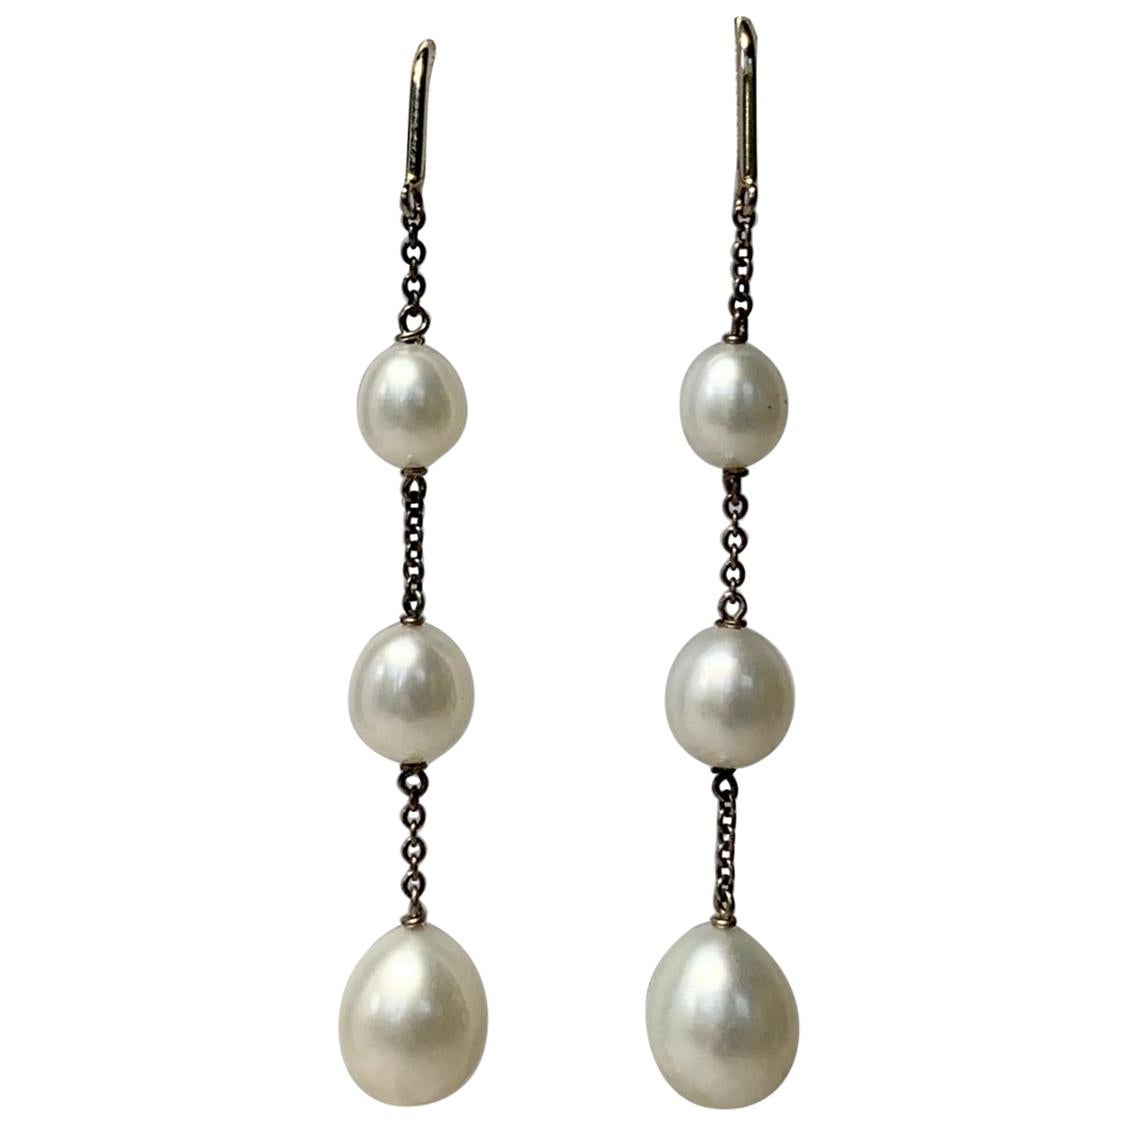 pearls by the yard earrings